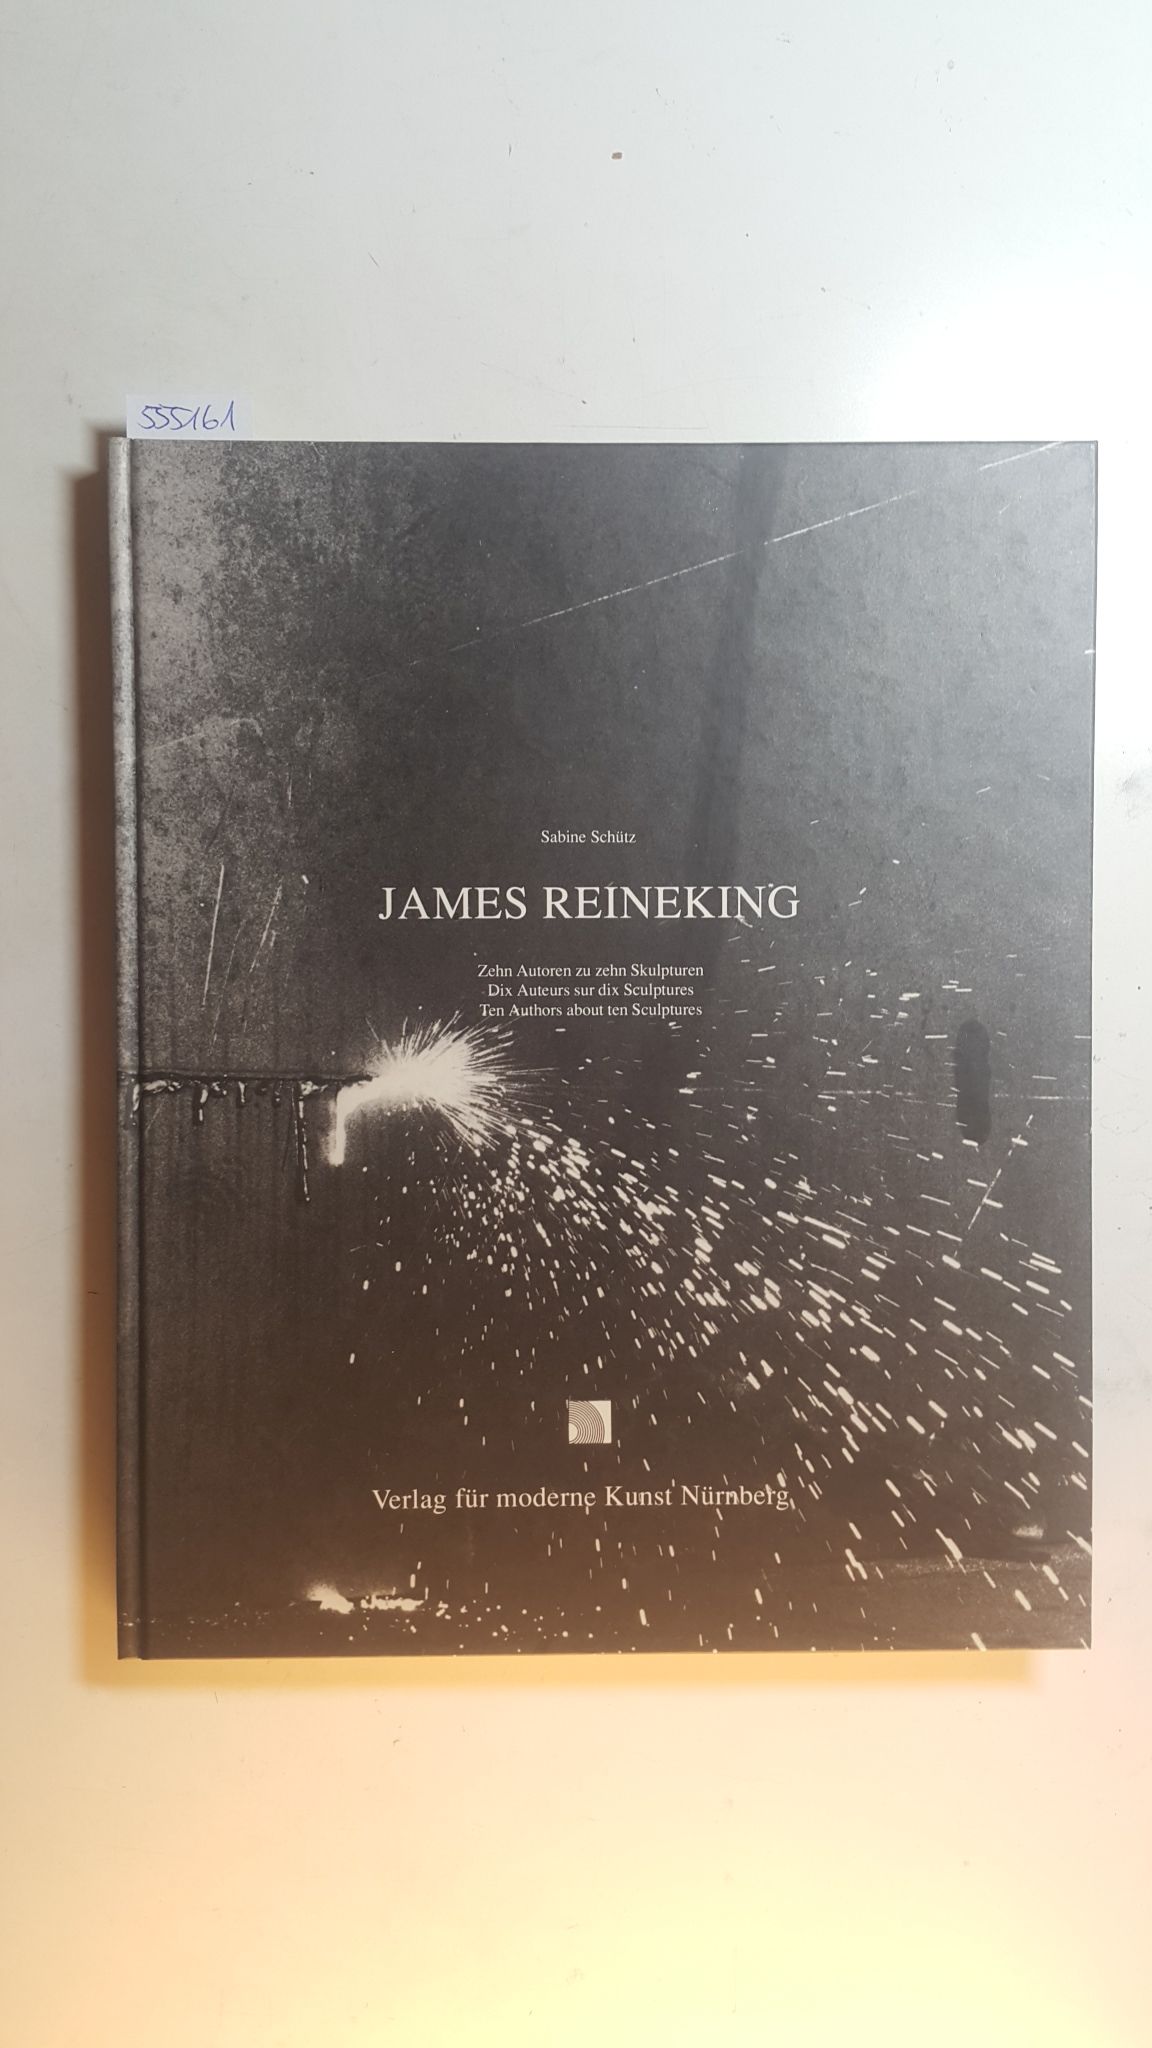 James Reineking : zehn Autoren zu zehn Skulpturen - Reineking, James [Ill.] ; Schütz, Sabine